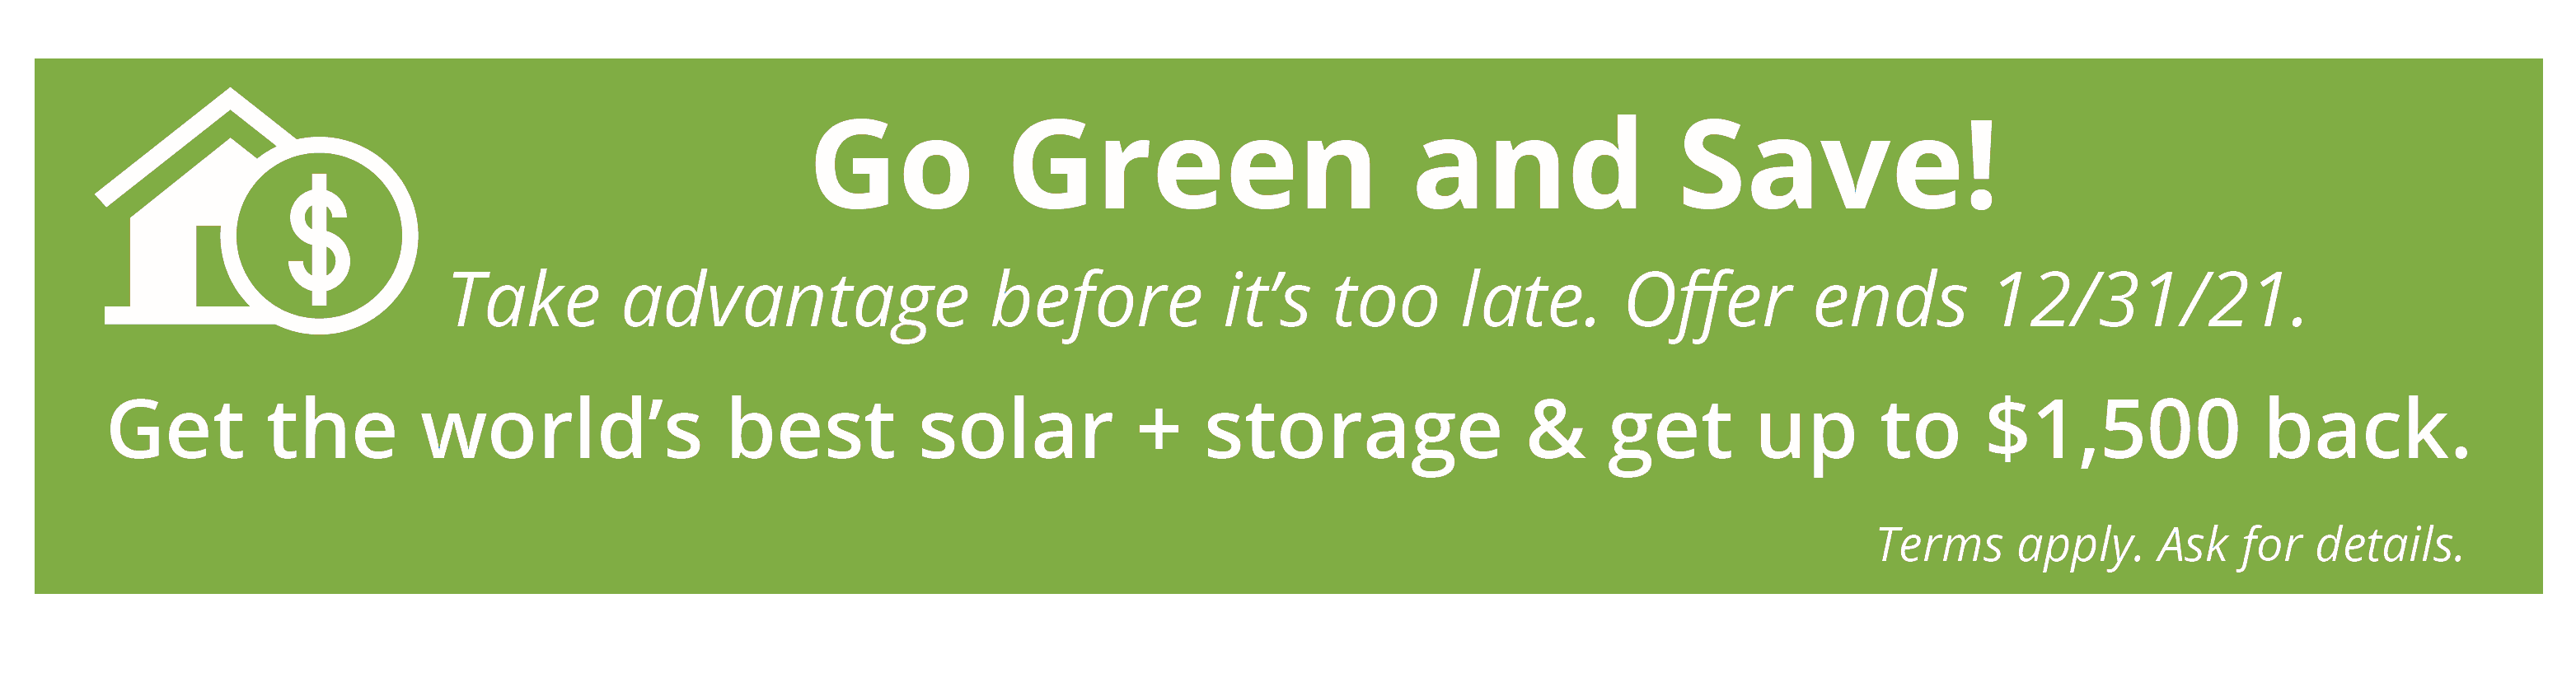 Go Green & Save Green Rebate